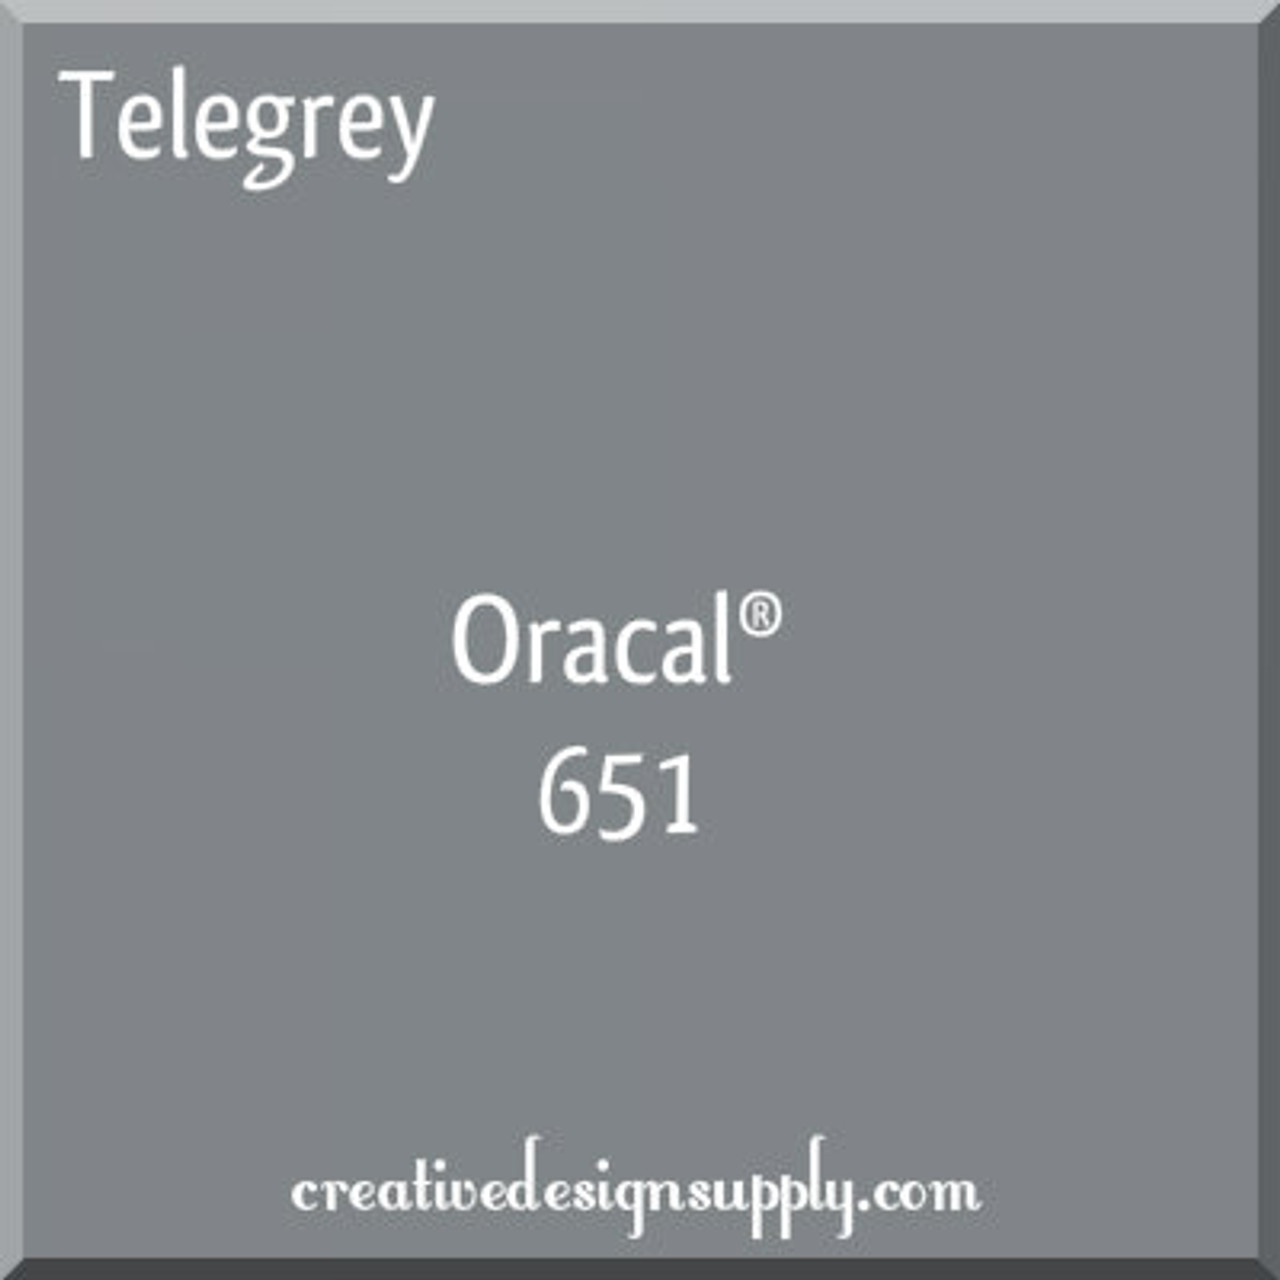 Oracal 651 | Telegrey